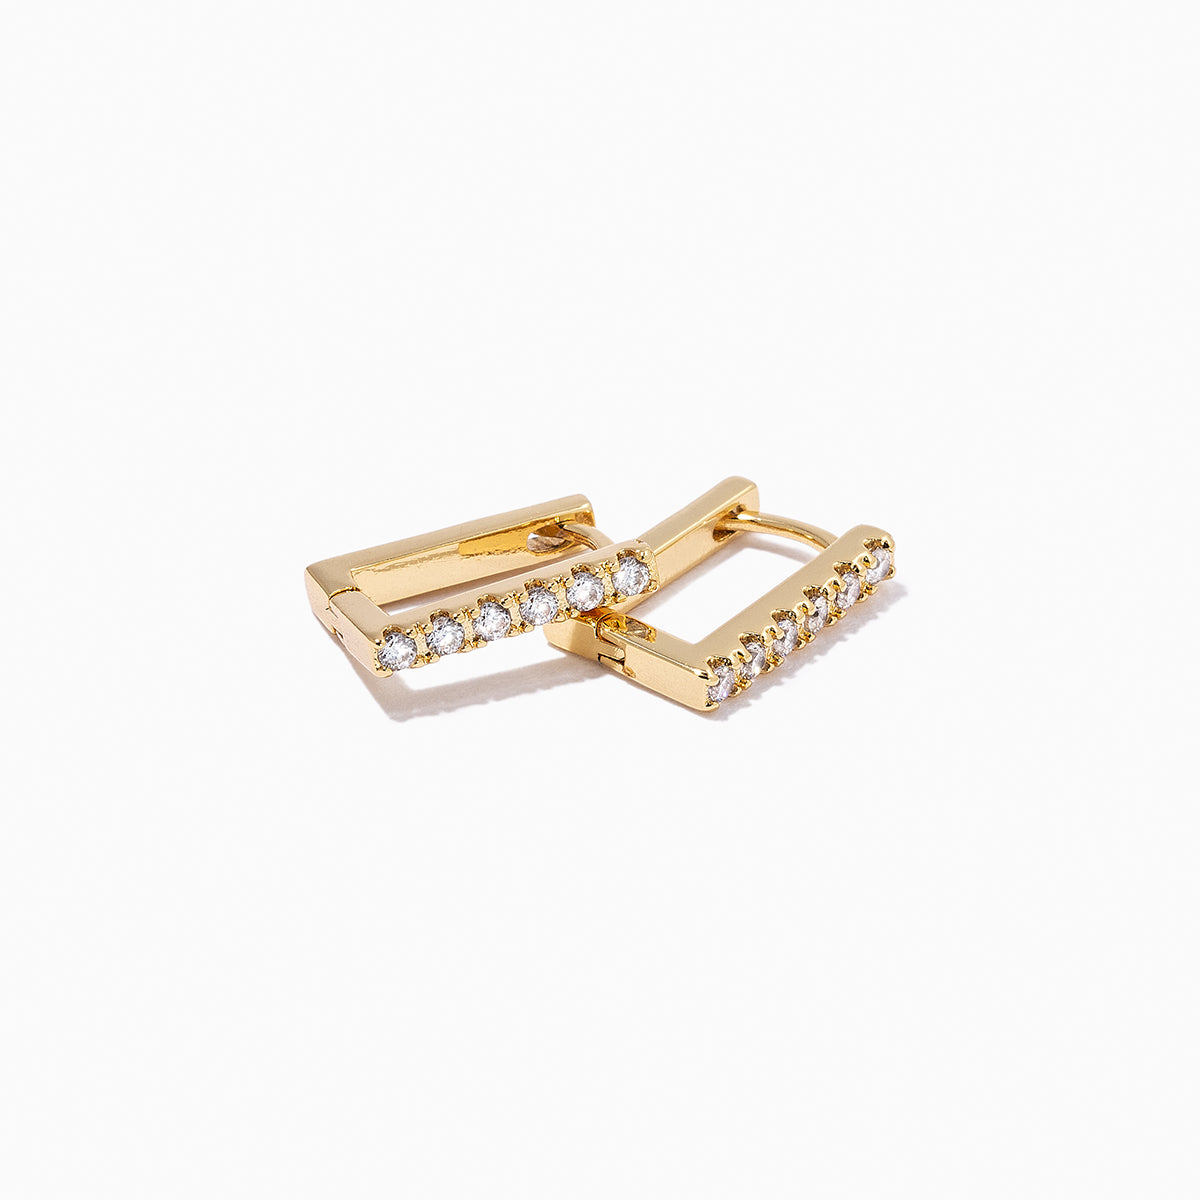 Ryman Huggies | Gold | Product Detail Image | Uncommon James